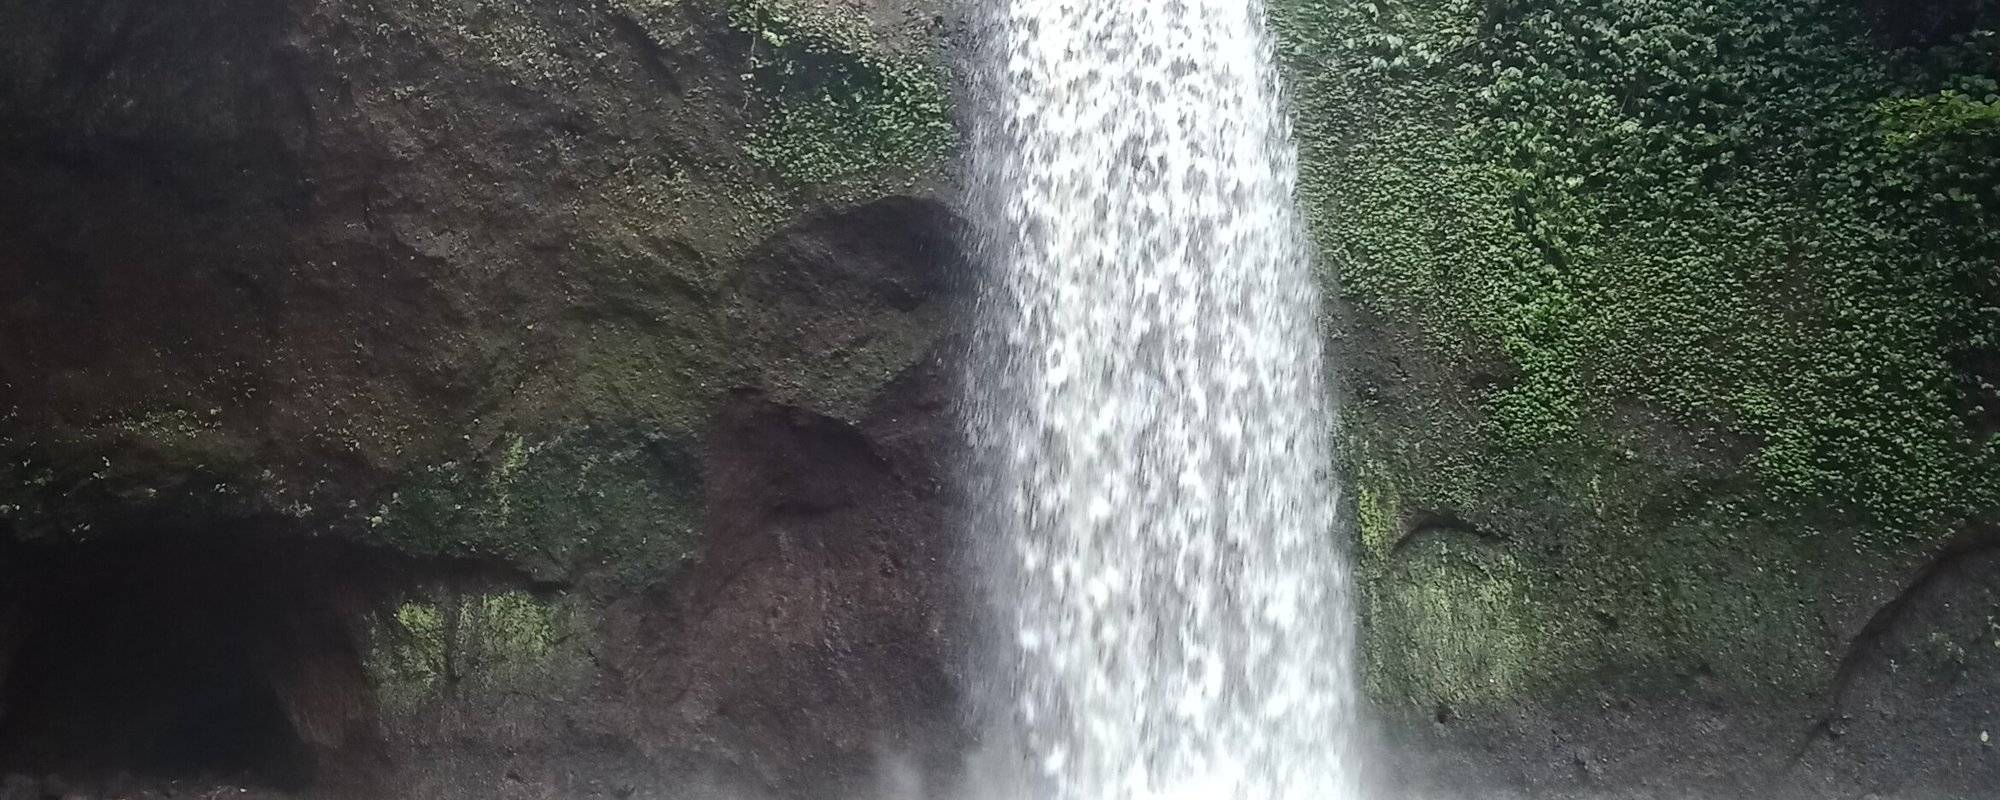 Chasing waterfalls in Ubud, Bali.